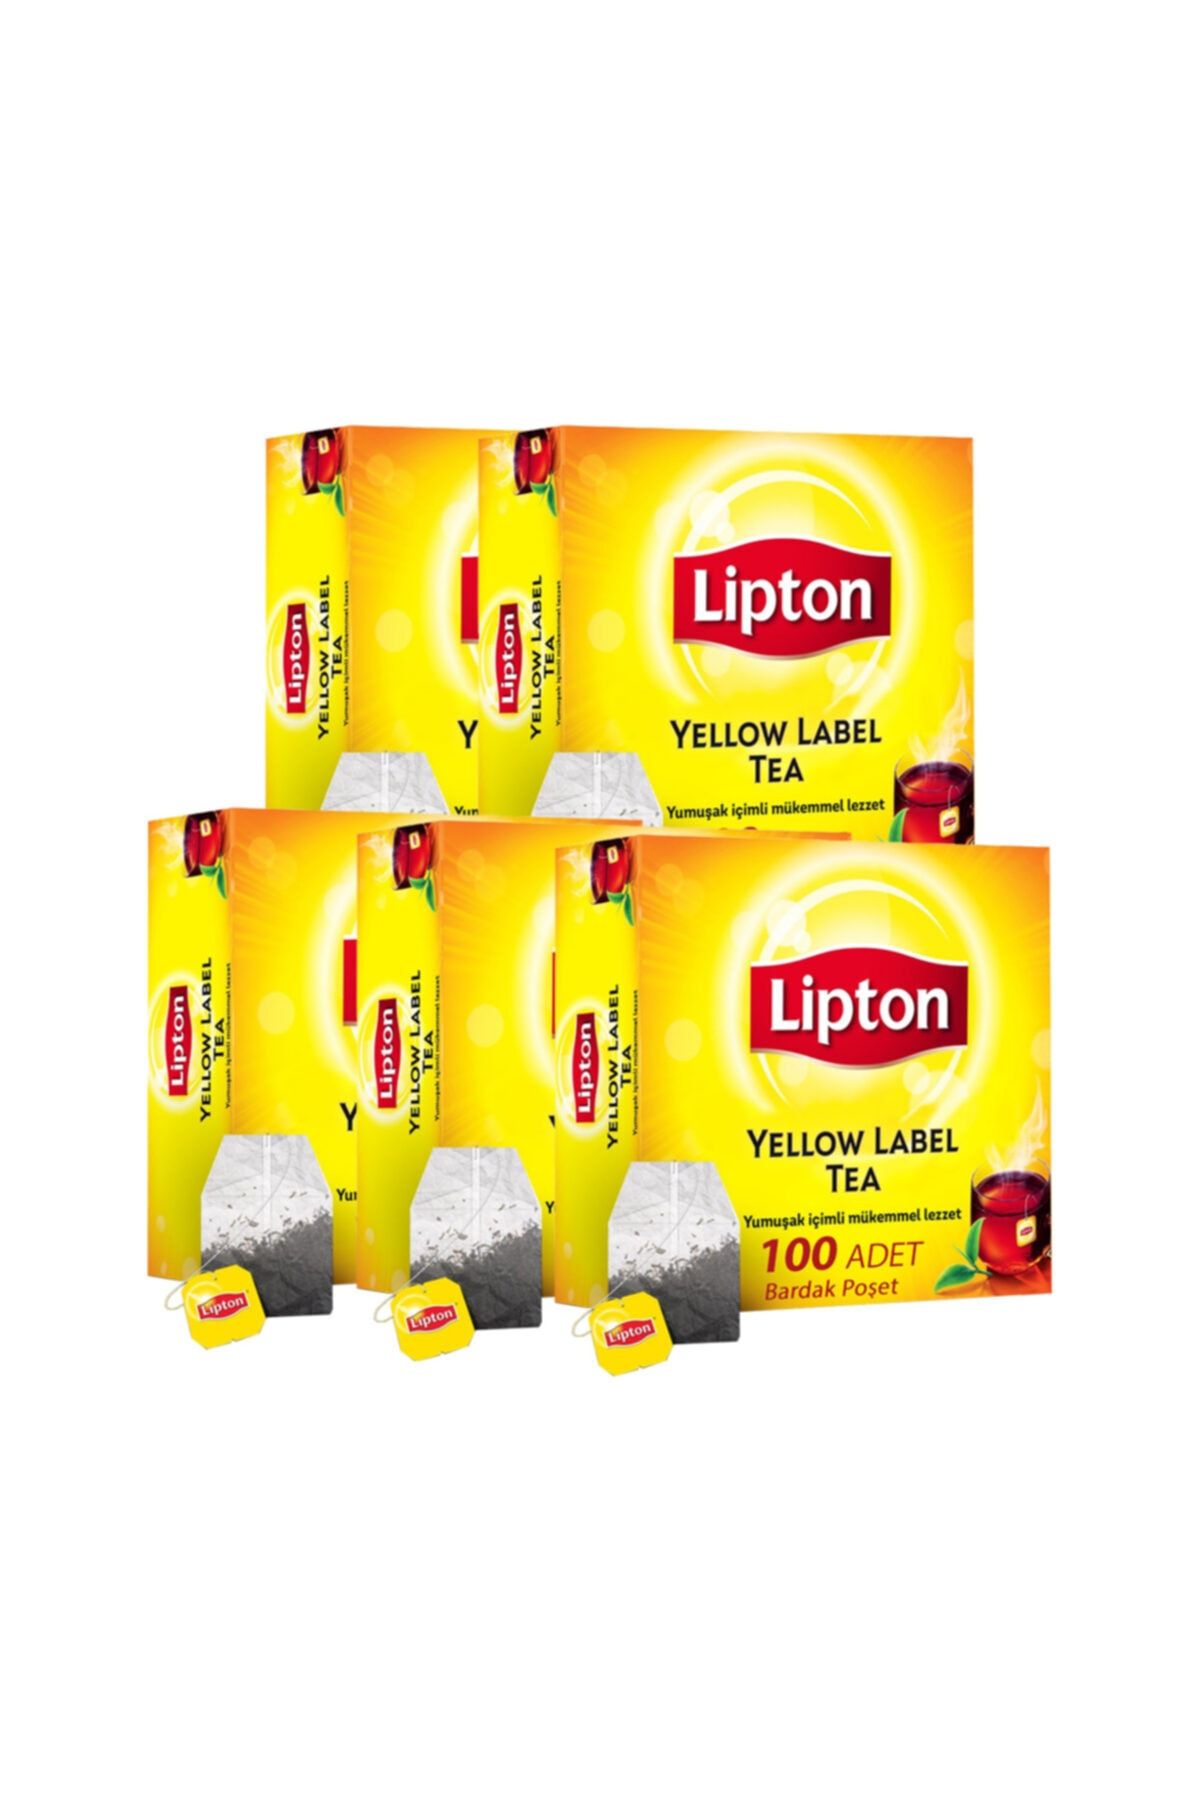 Lipton Yellow Label Bardak Poşet Çay 100'lü 5 Paket 500 Adet